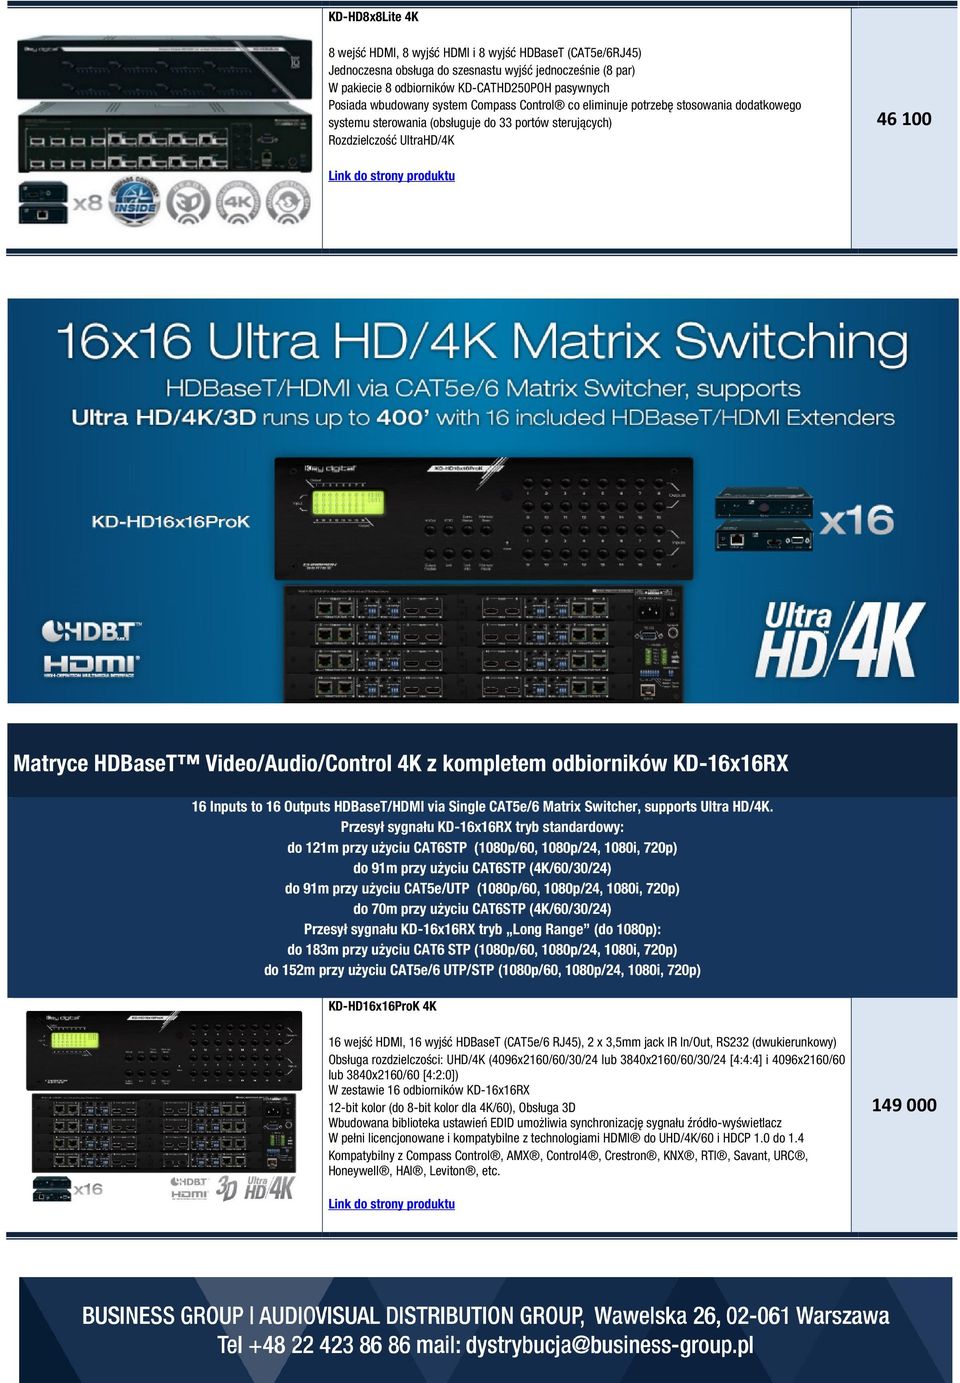 Video/Audio/Control 4K z kompletem odbiorników KD-16x16RX 16 Inputs to 16 Outputs HDBaseT/HDMI via Single CAT5e/6 Matrix Switcher, supports Ultra HD/4K.